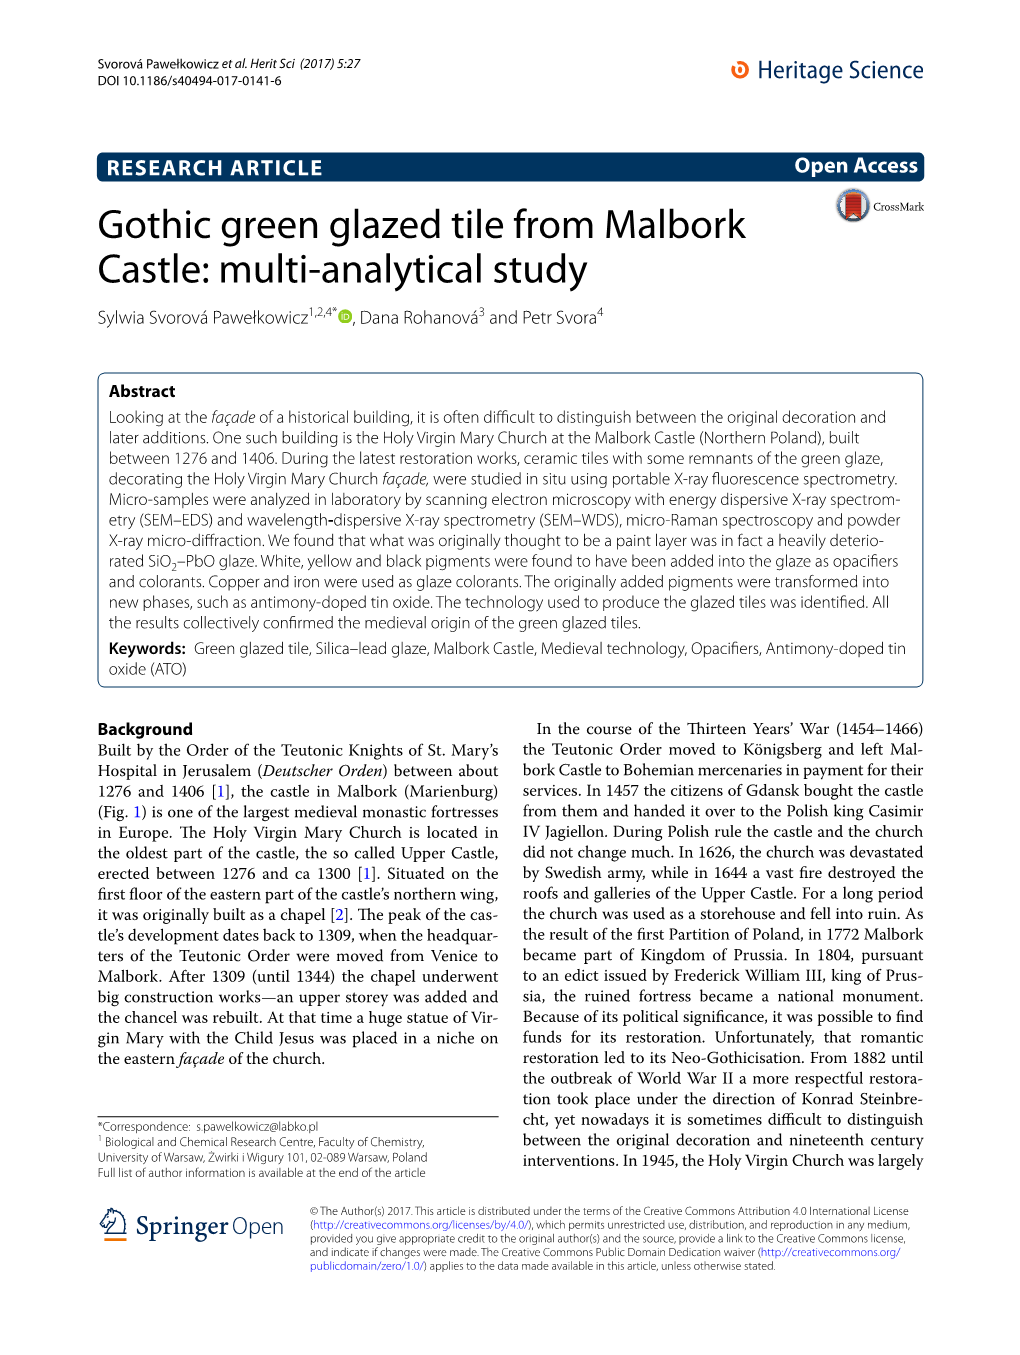 Gothic Green Glazed Tile from Malbork Castle: Multi-Analytical Study